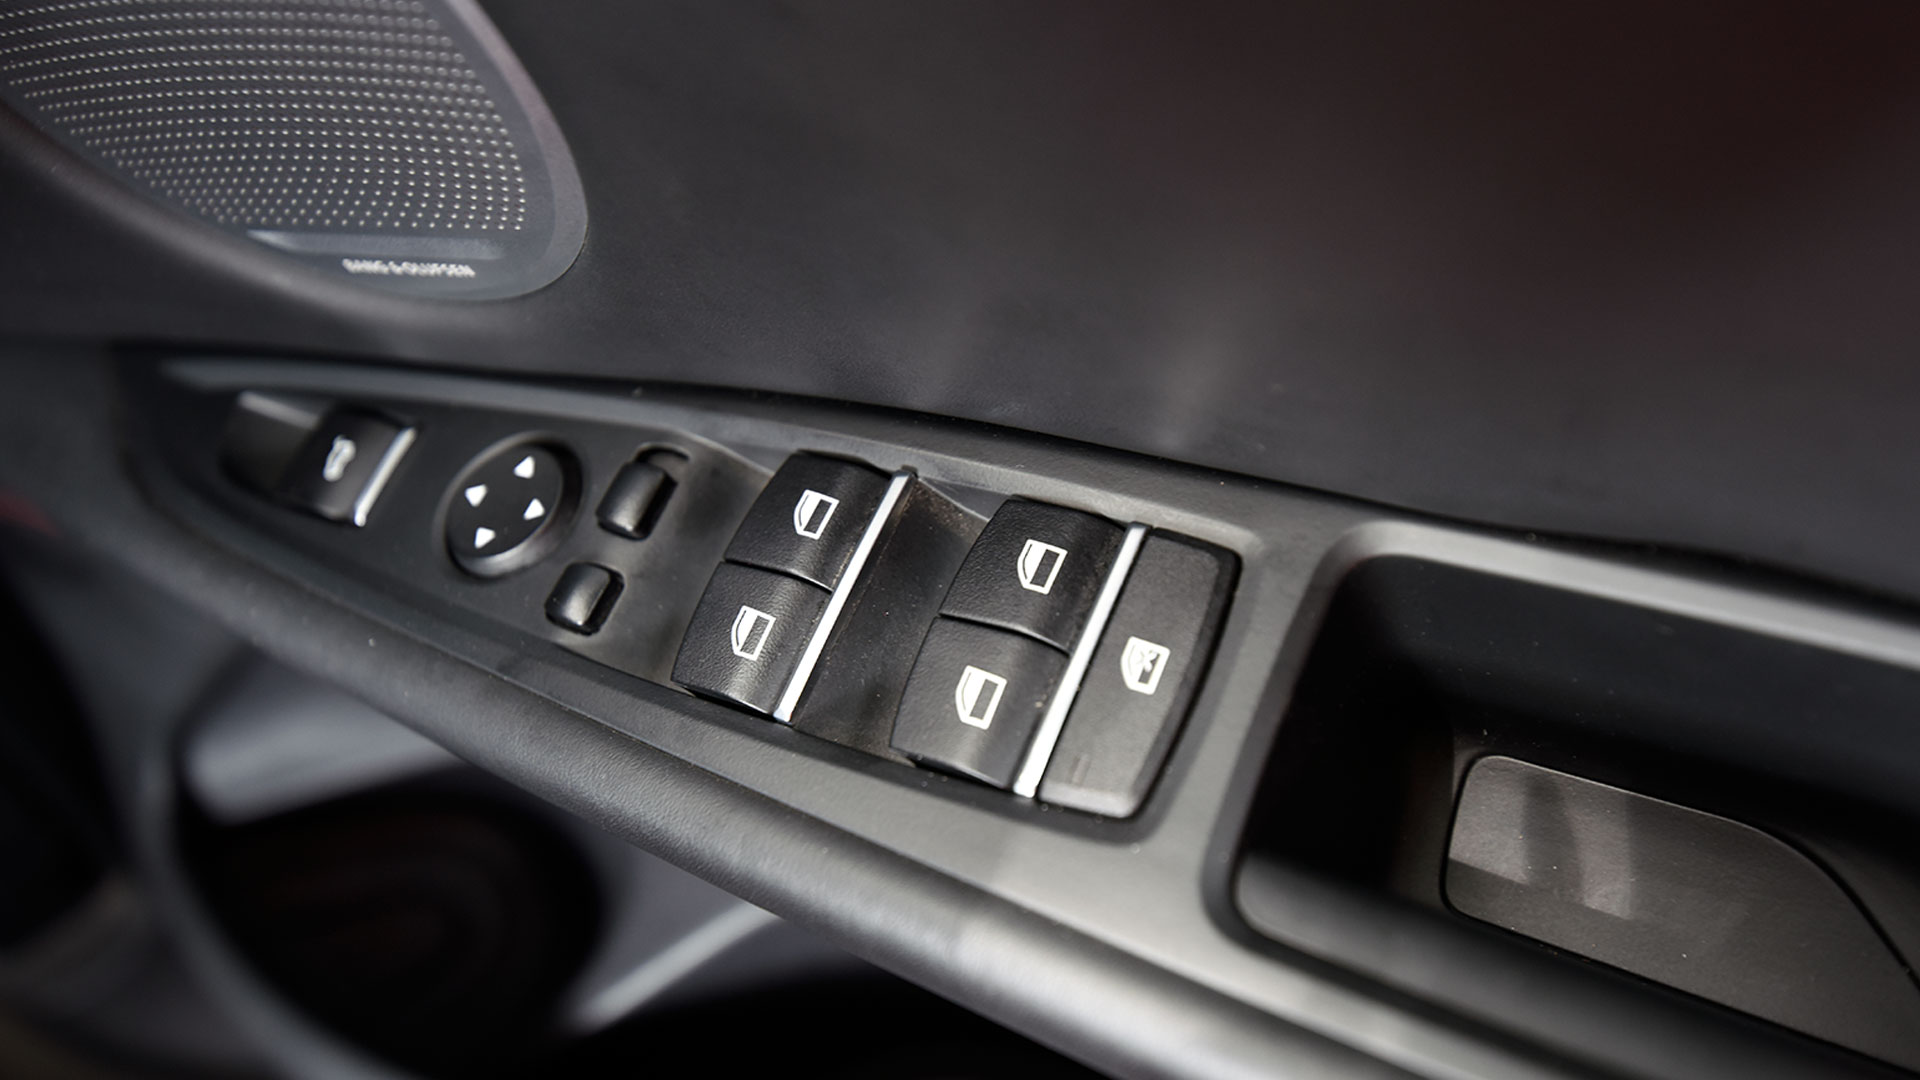 BMW X5 2015 M Interior